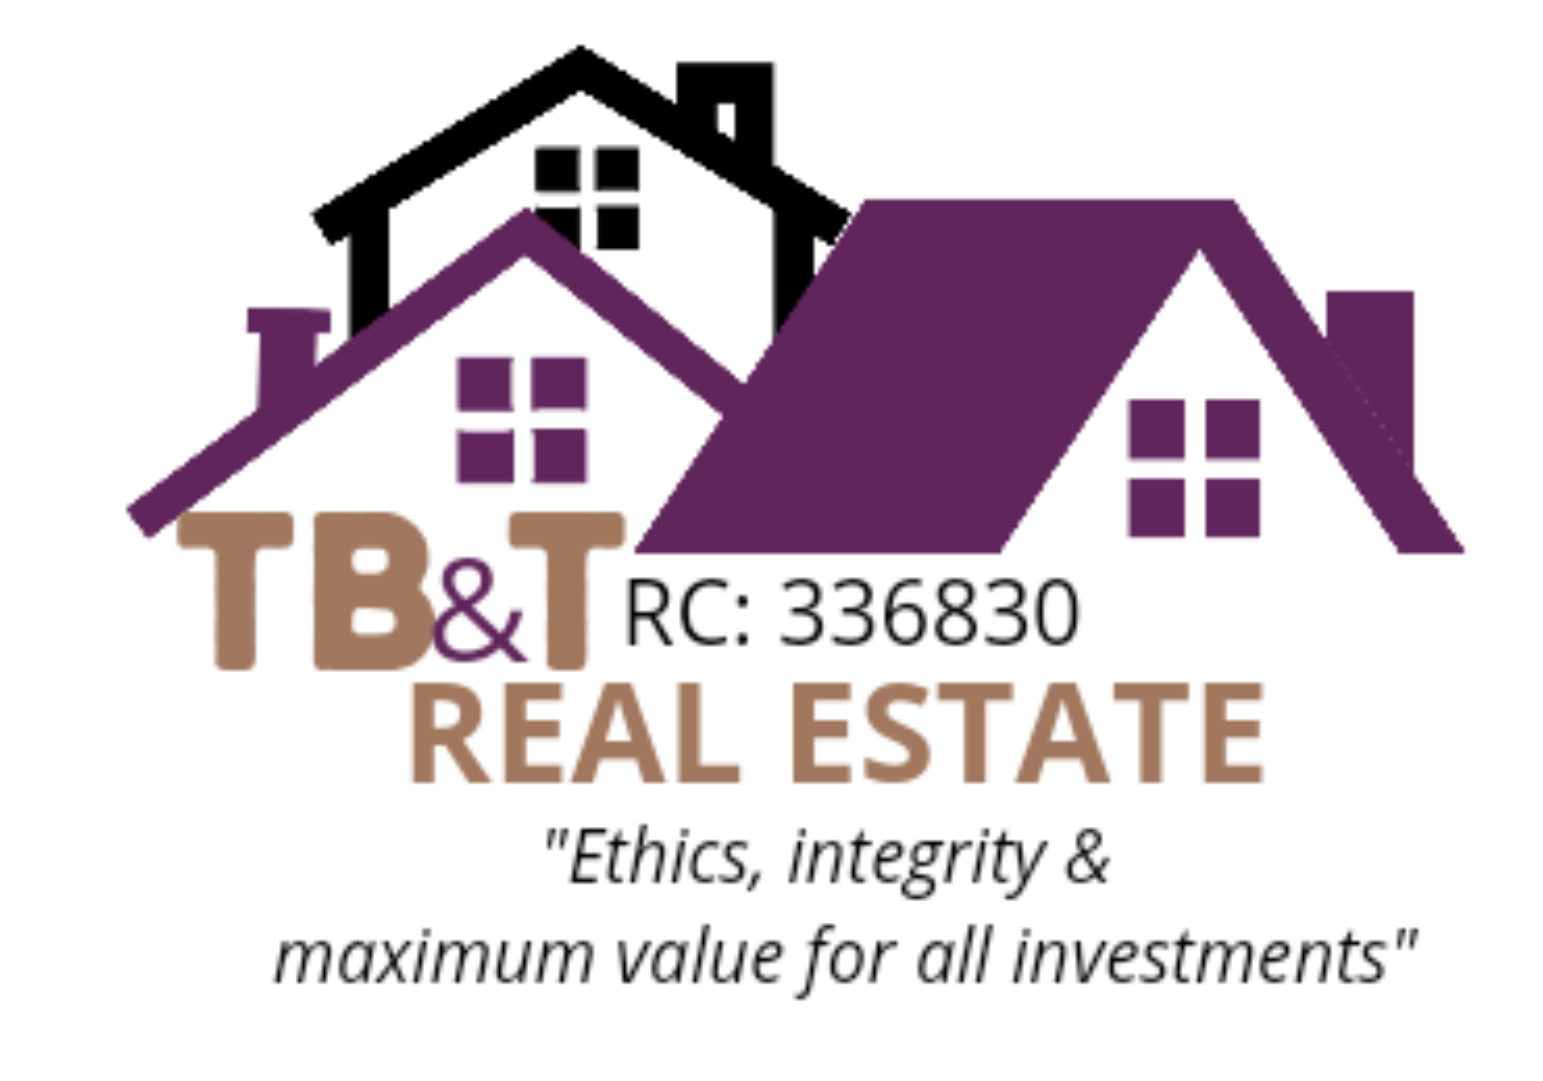 TB&T Real Estate